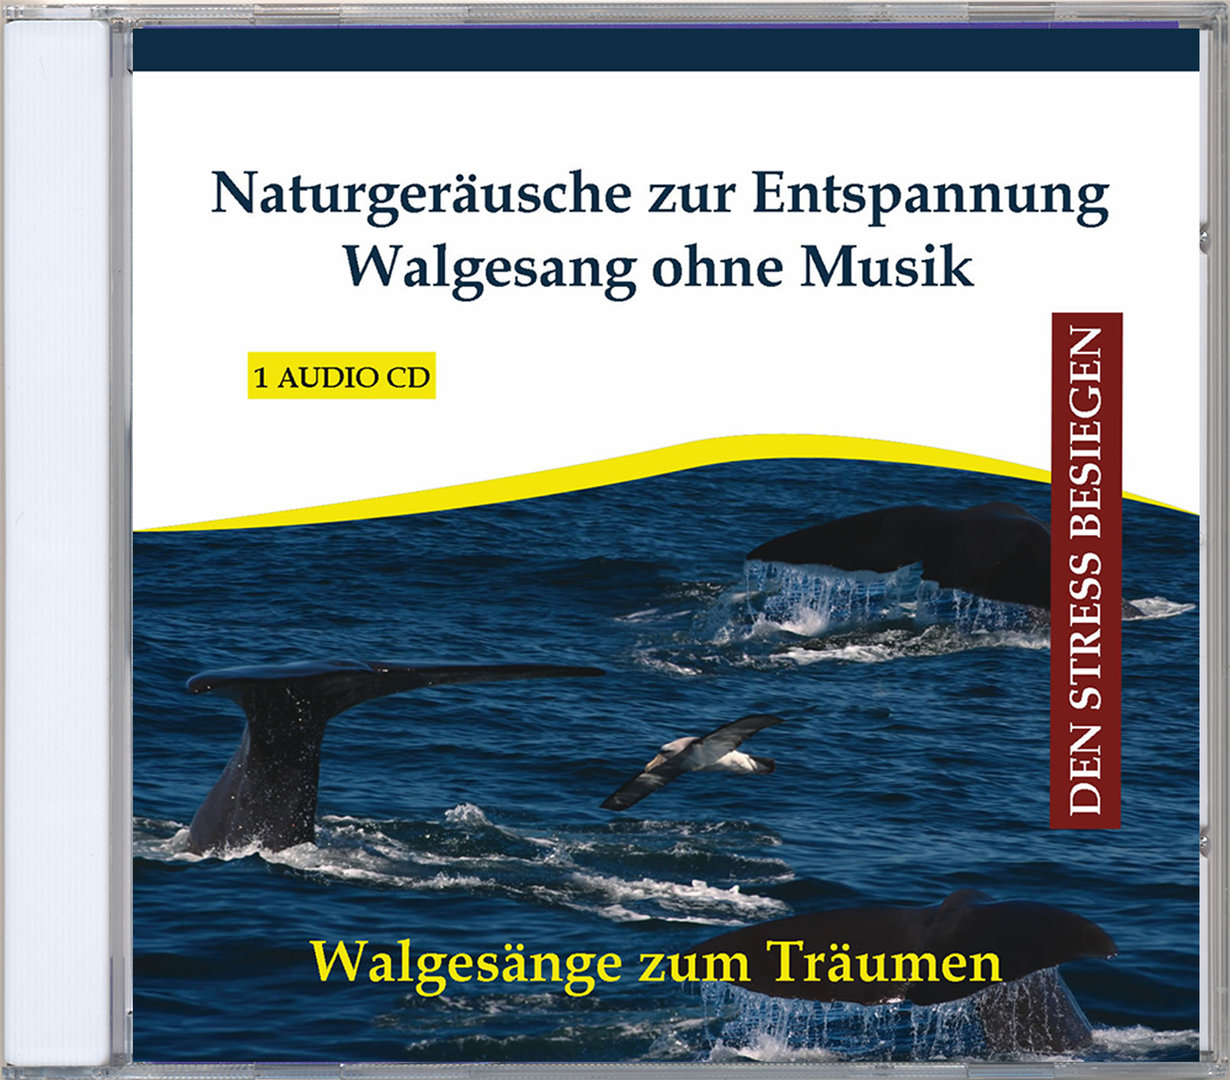 Naturgeräusche zur Entspannung - Walgesang ohne Musik - Audio-CD